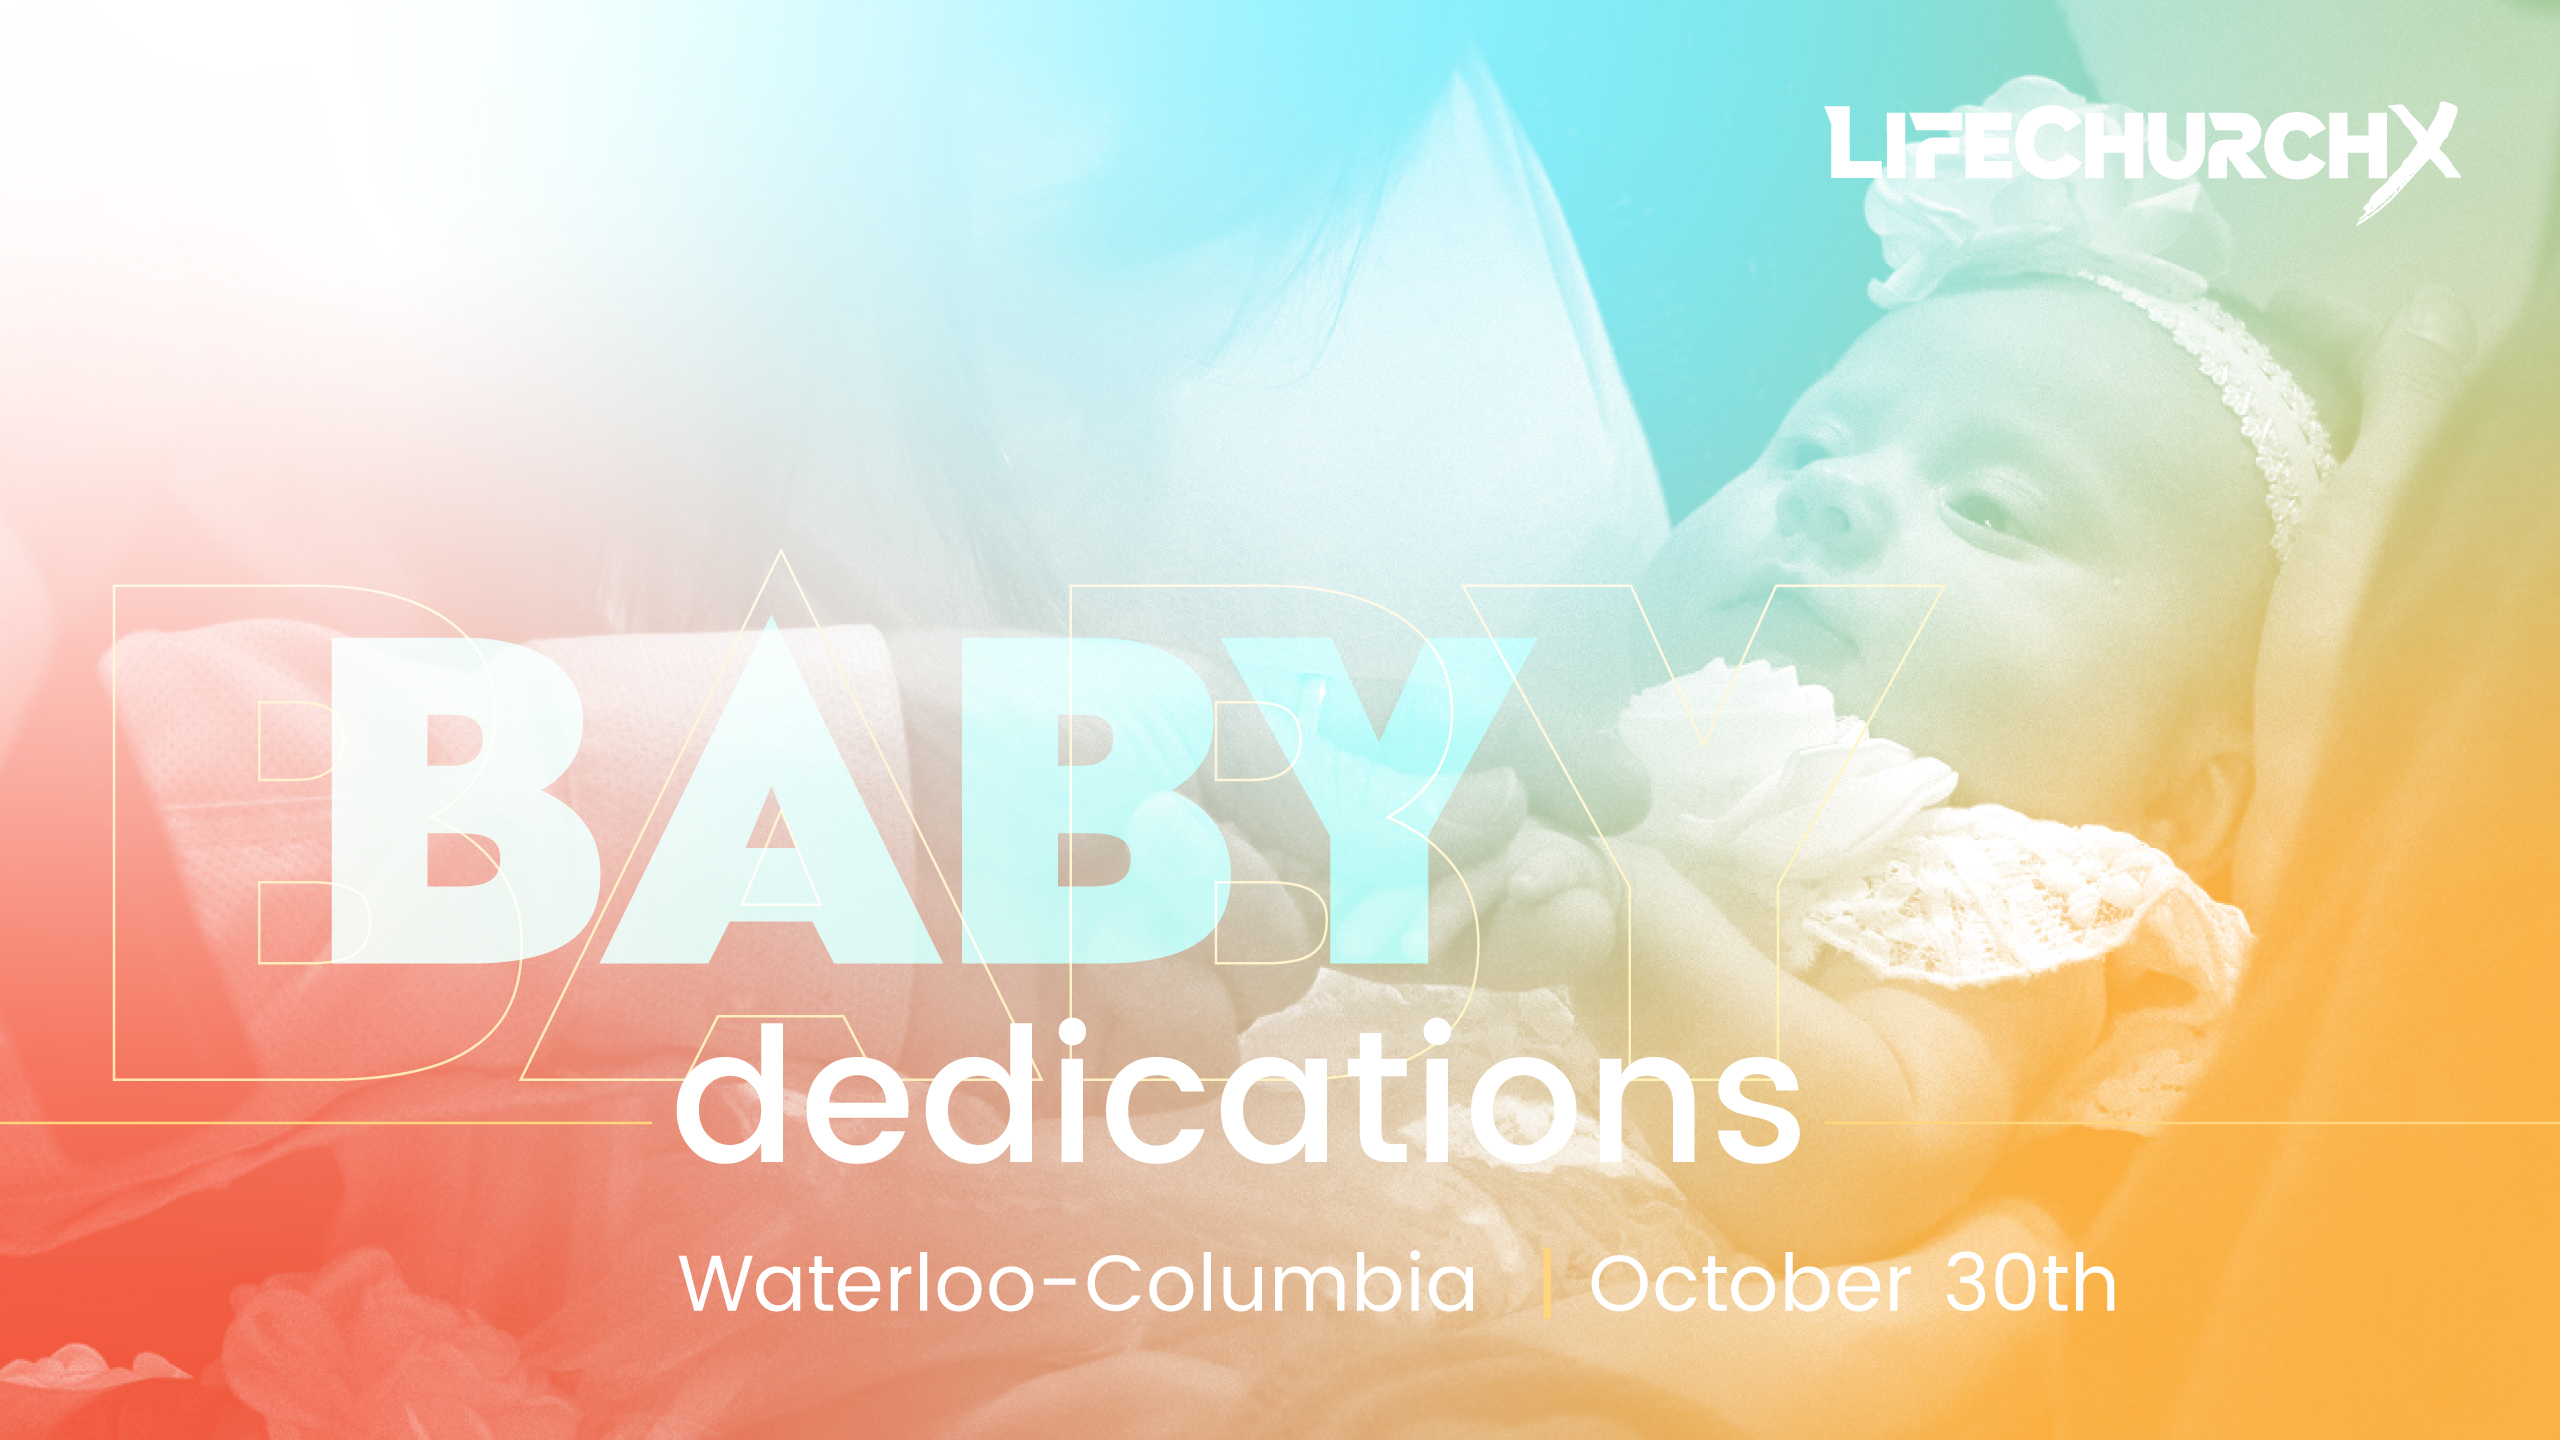 LifechurchX Baby Dedications Waterloo-Columbia IL